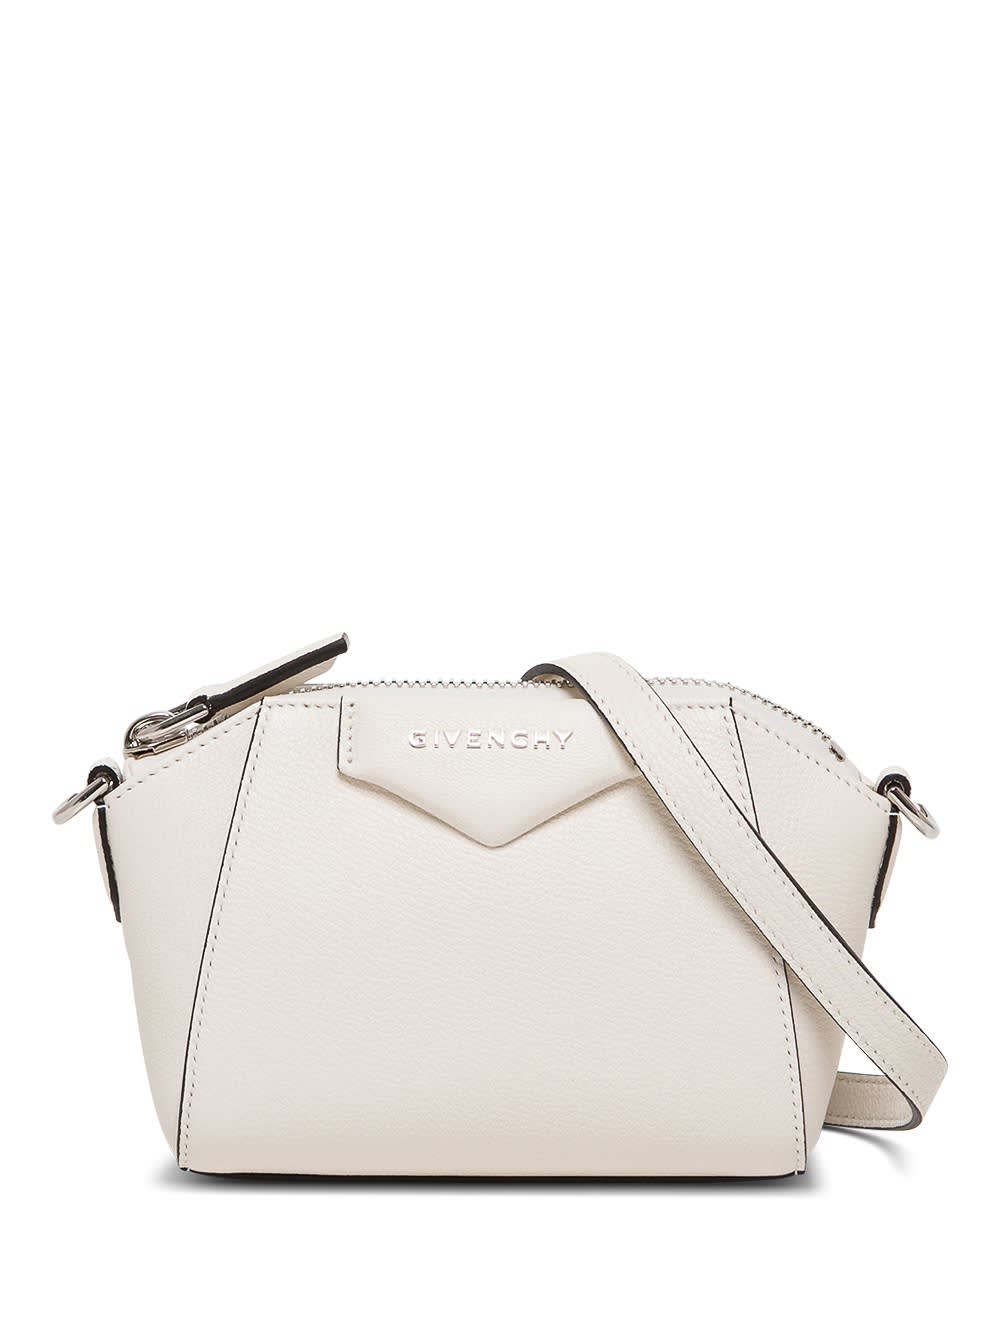 Givenchy Antigona Nano Crossbody Bag In White Leather